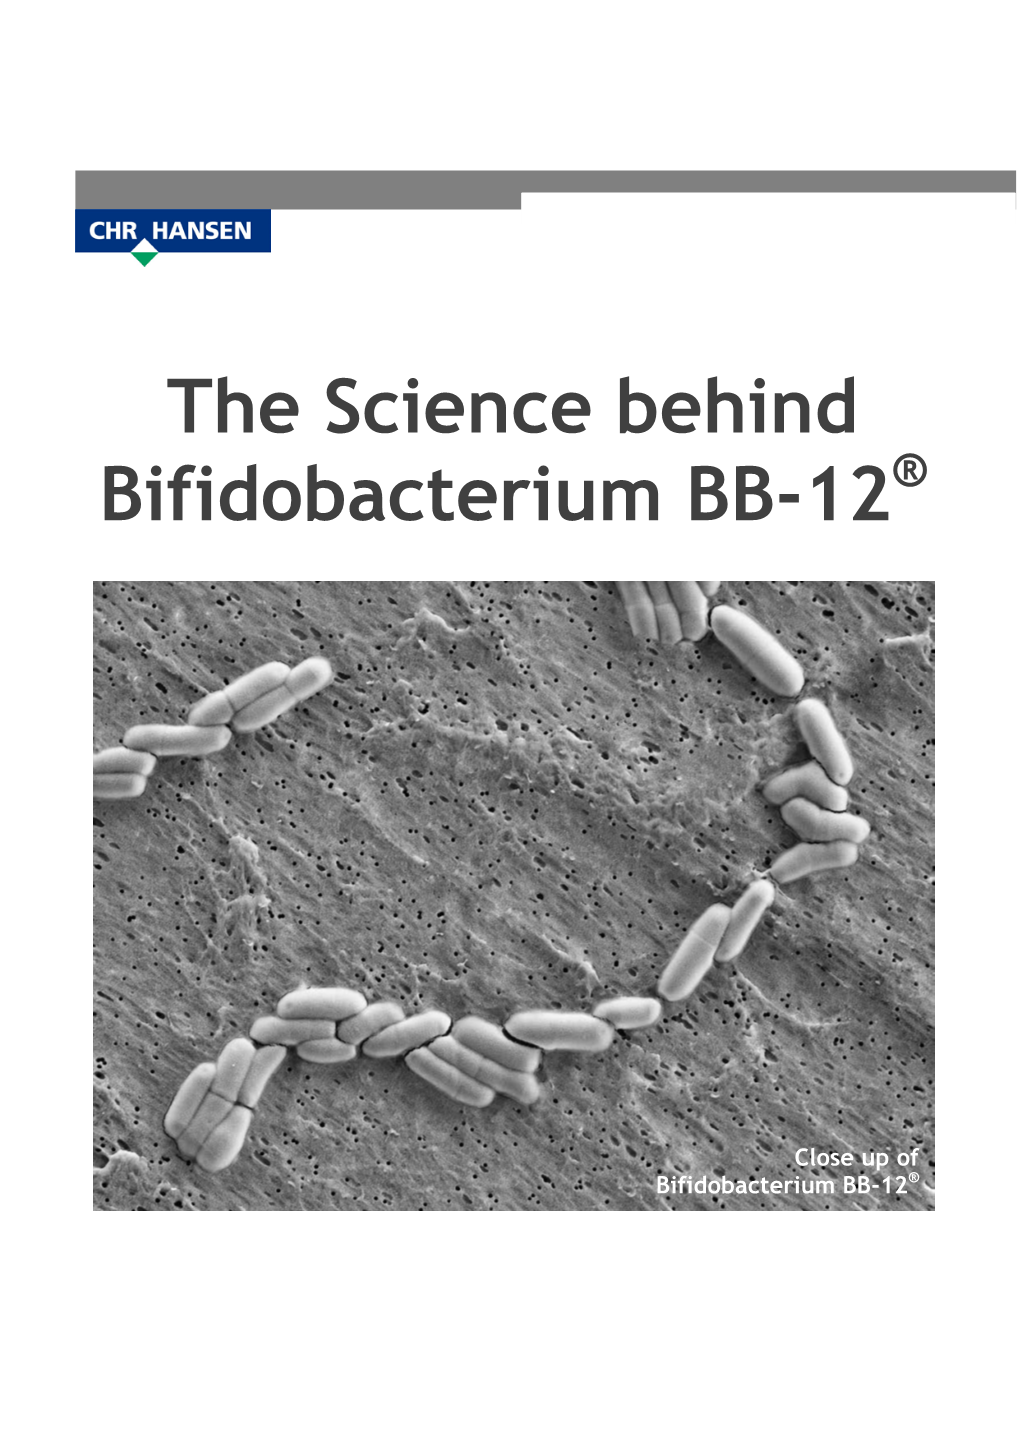 The Science Behind Bifidobacterium BB-12®